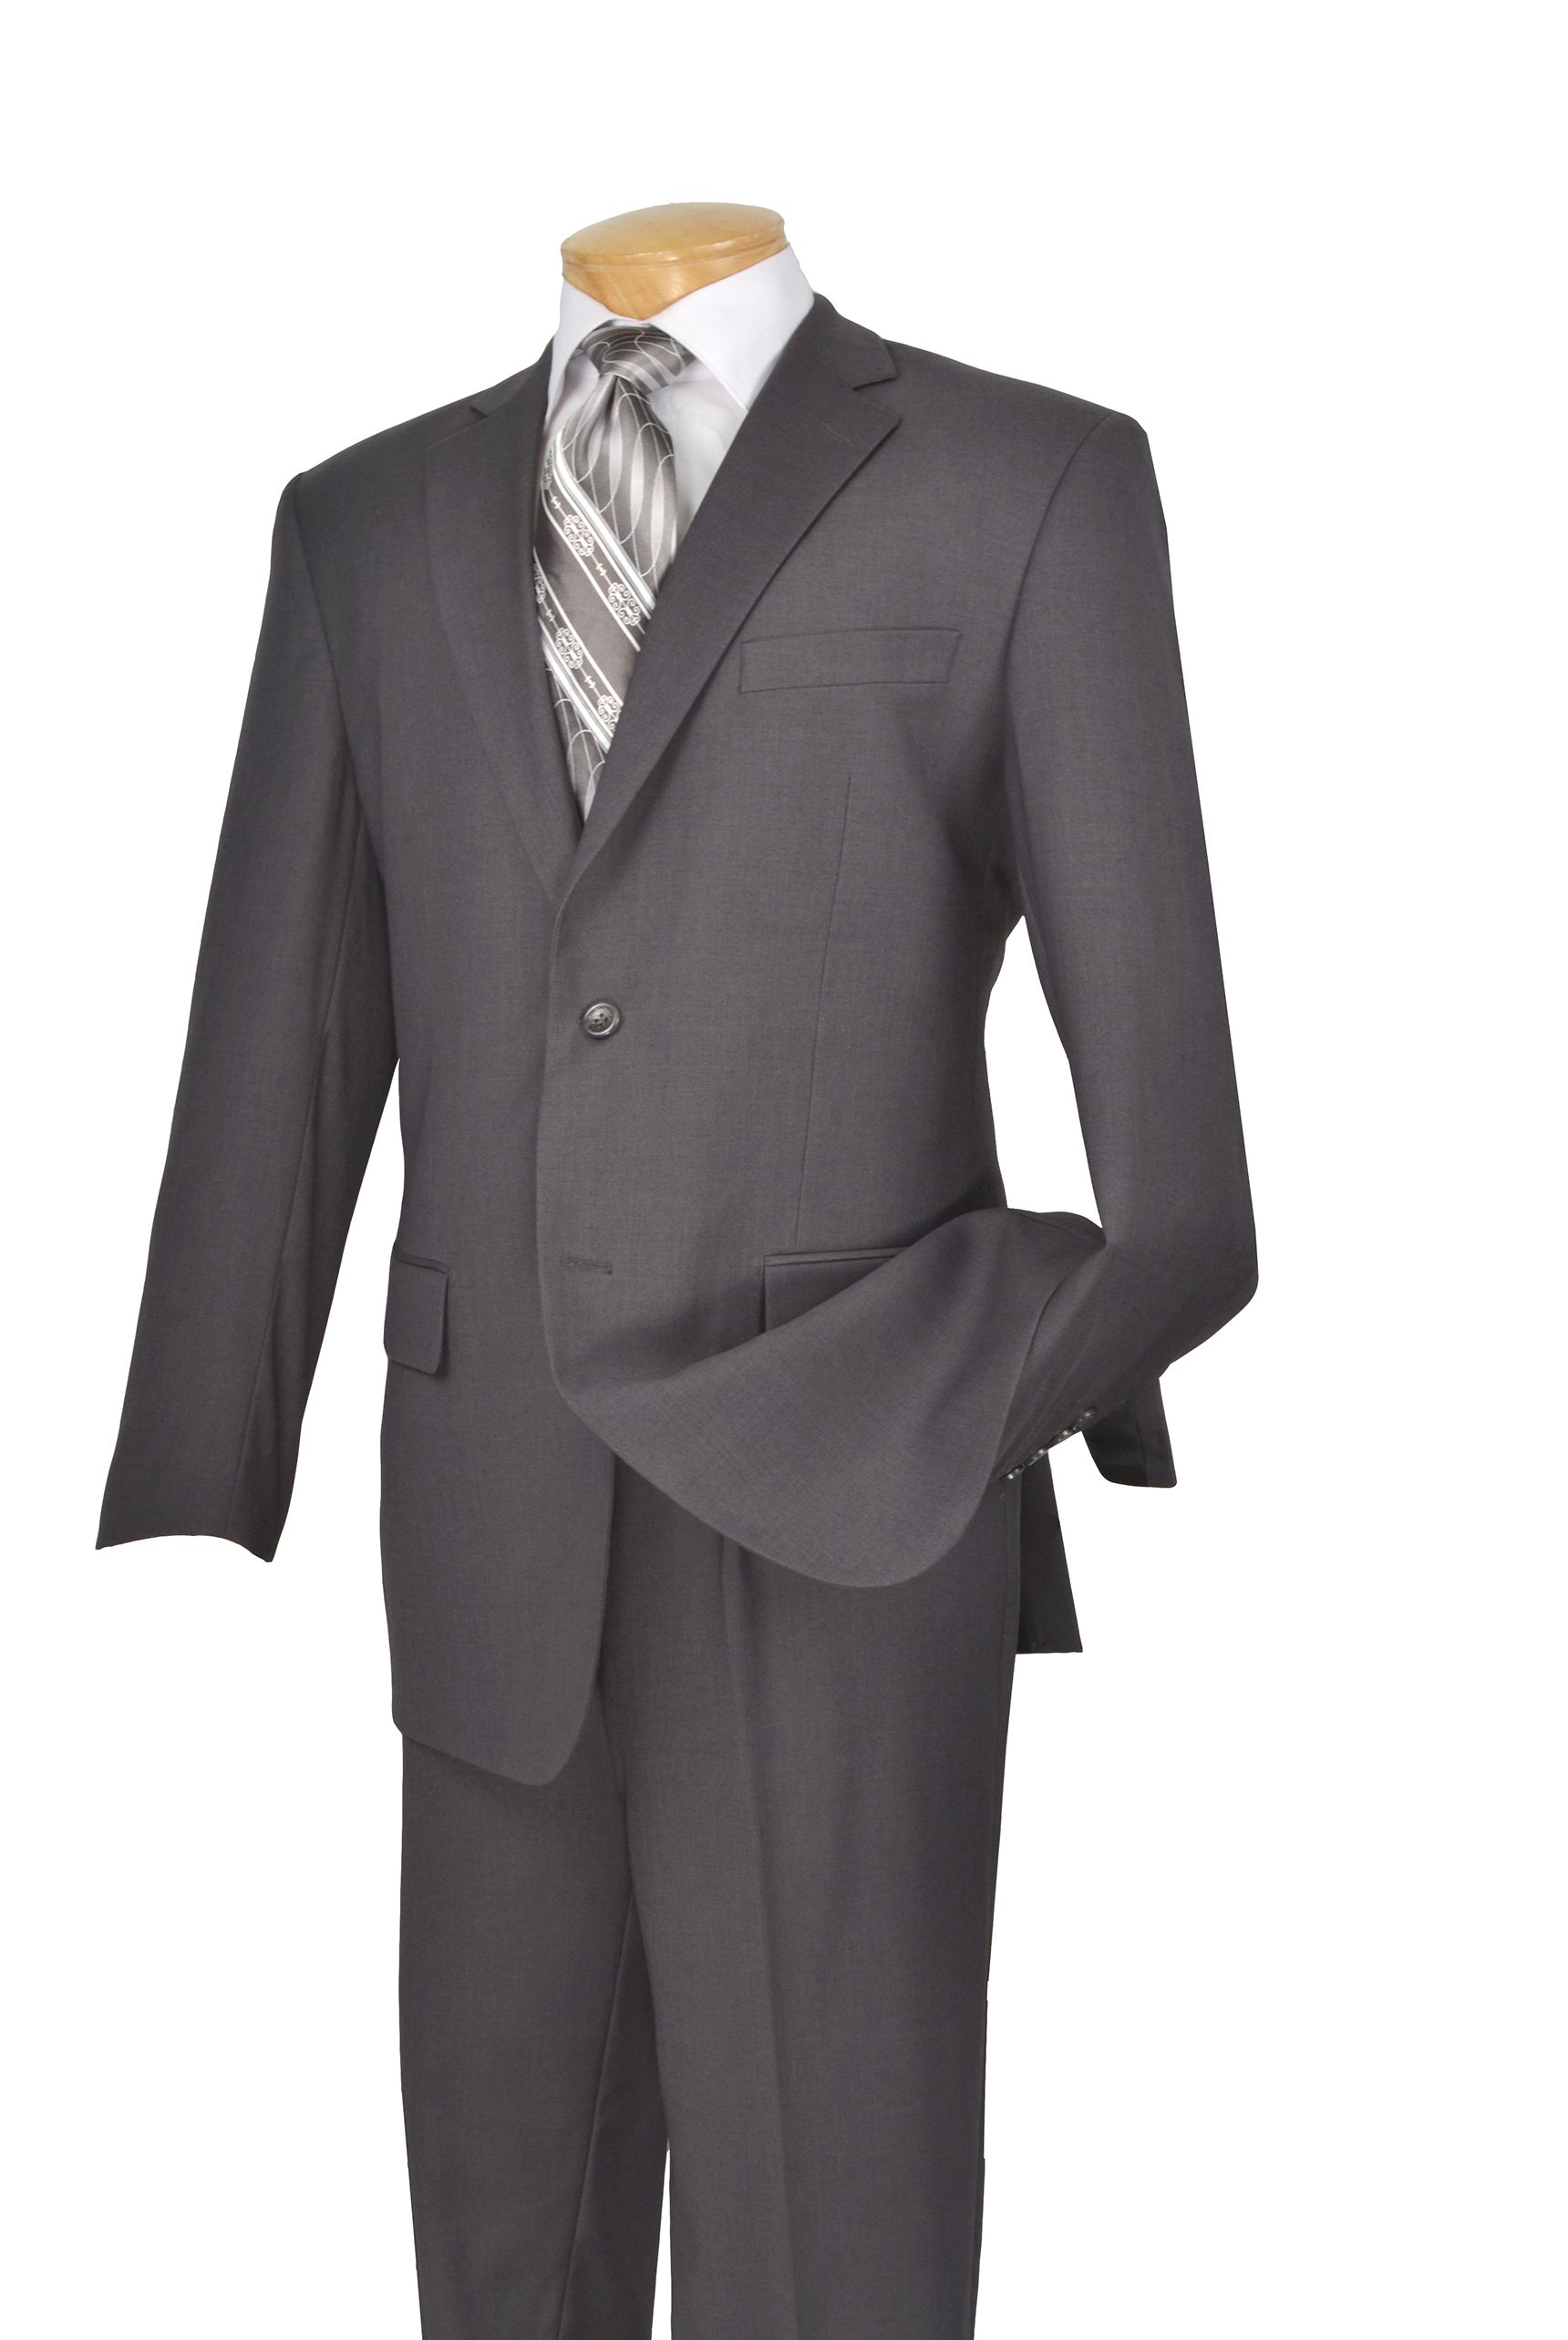 Vinci Men's 2 Piece Wool Feel Executive Suit - Pure Solid